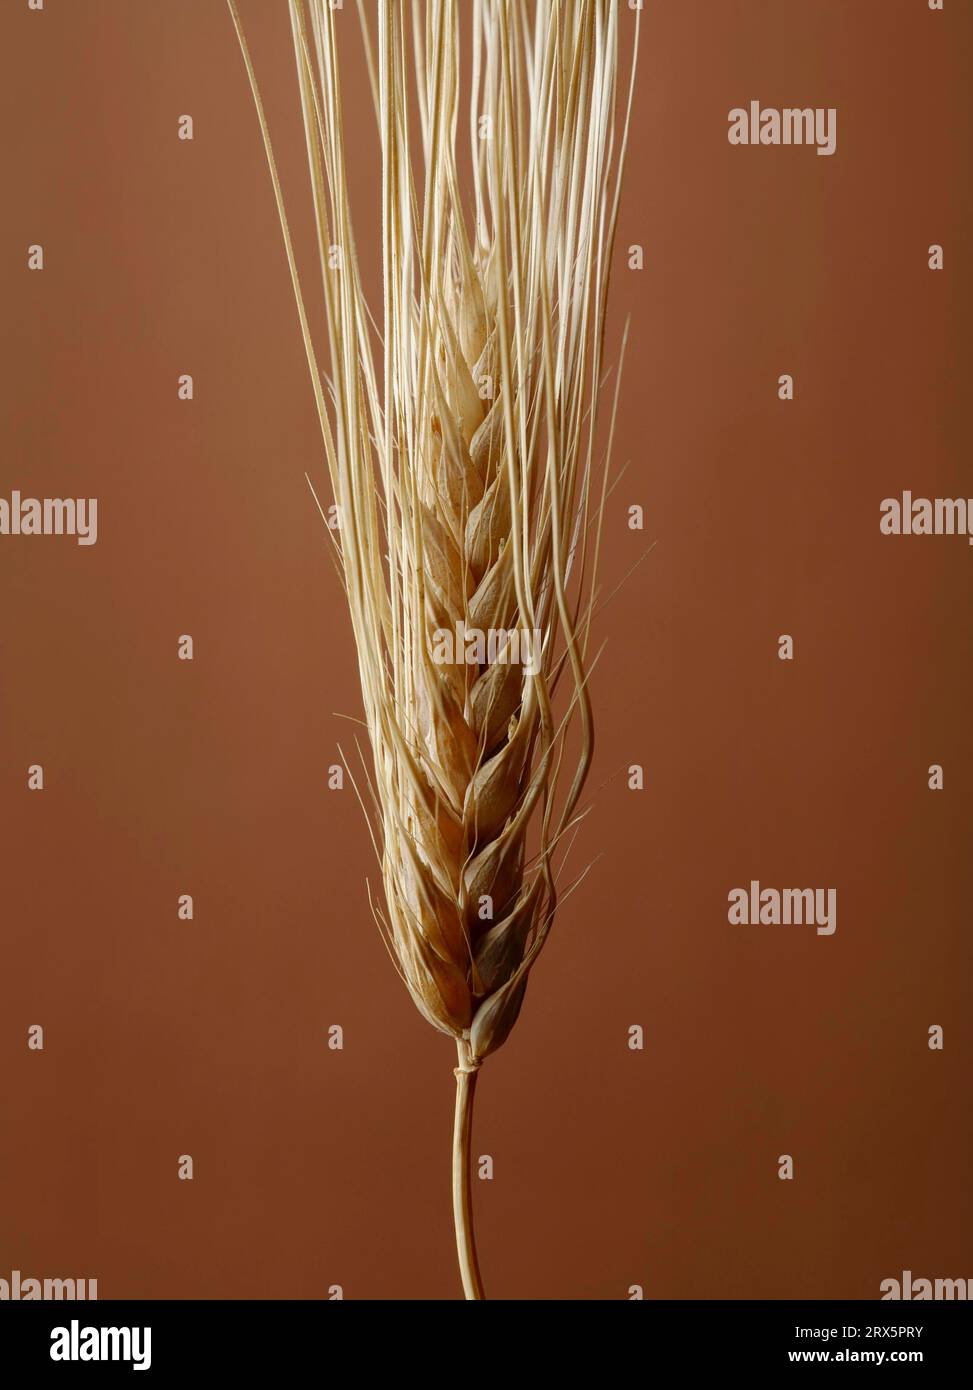 Barley seedhead on brown background Stock Photo